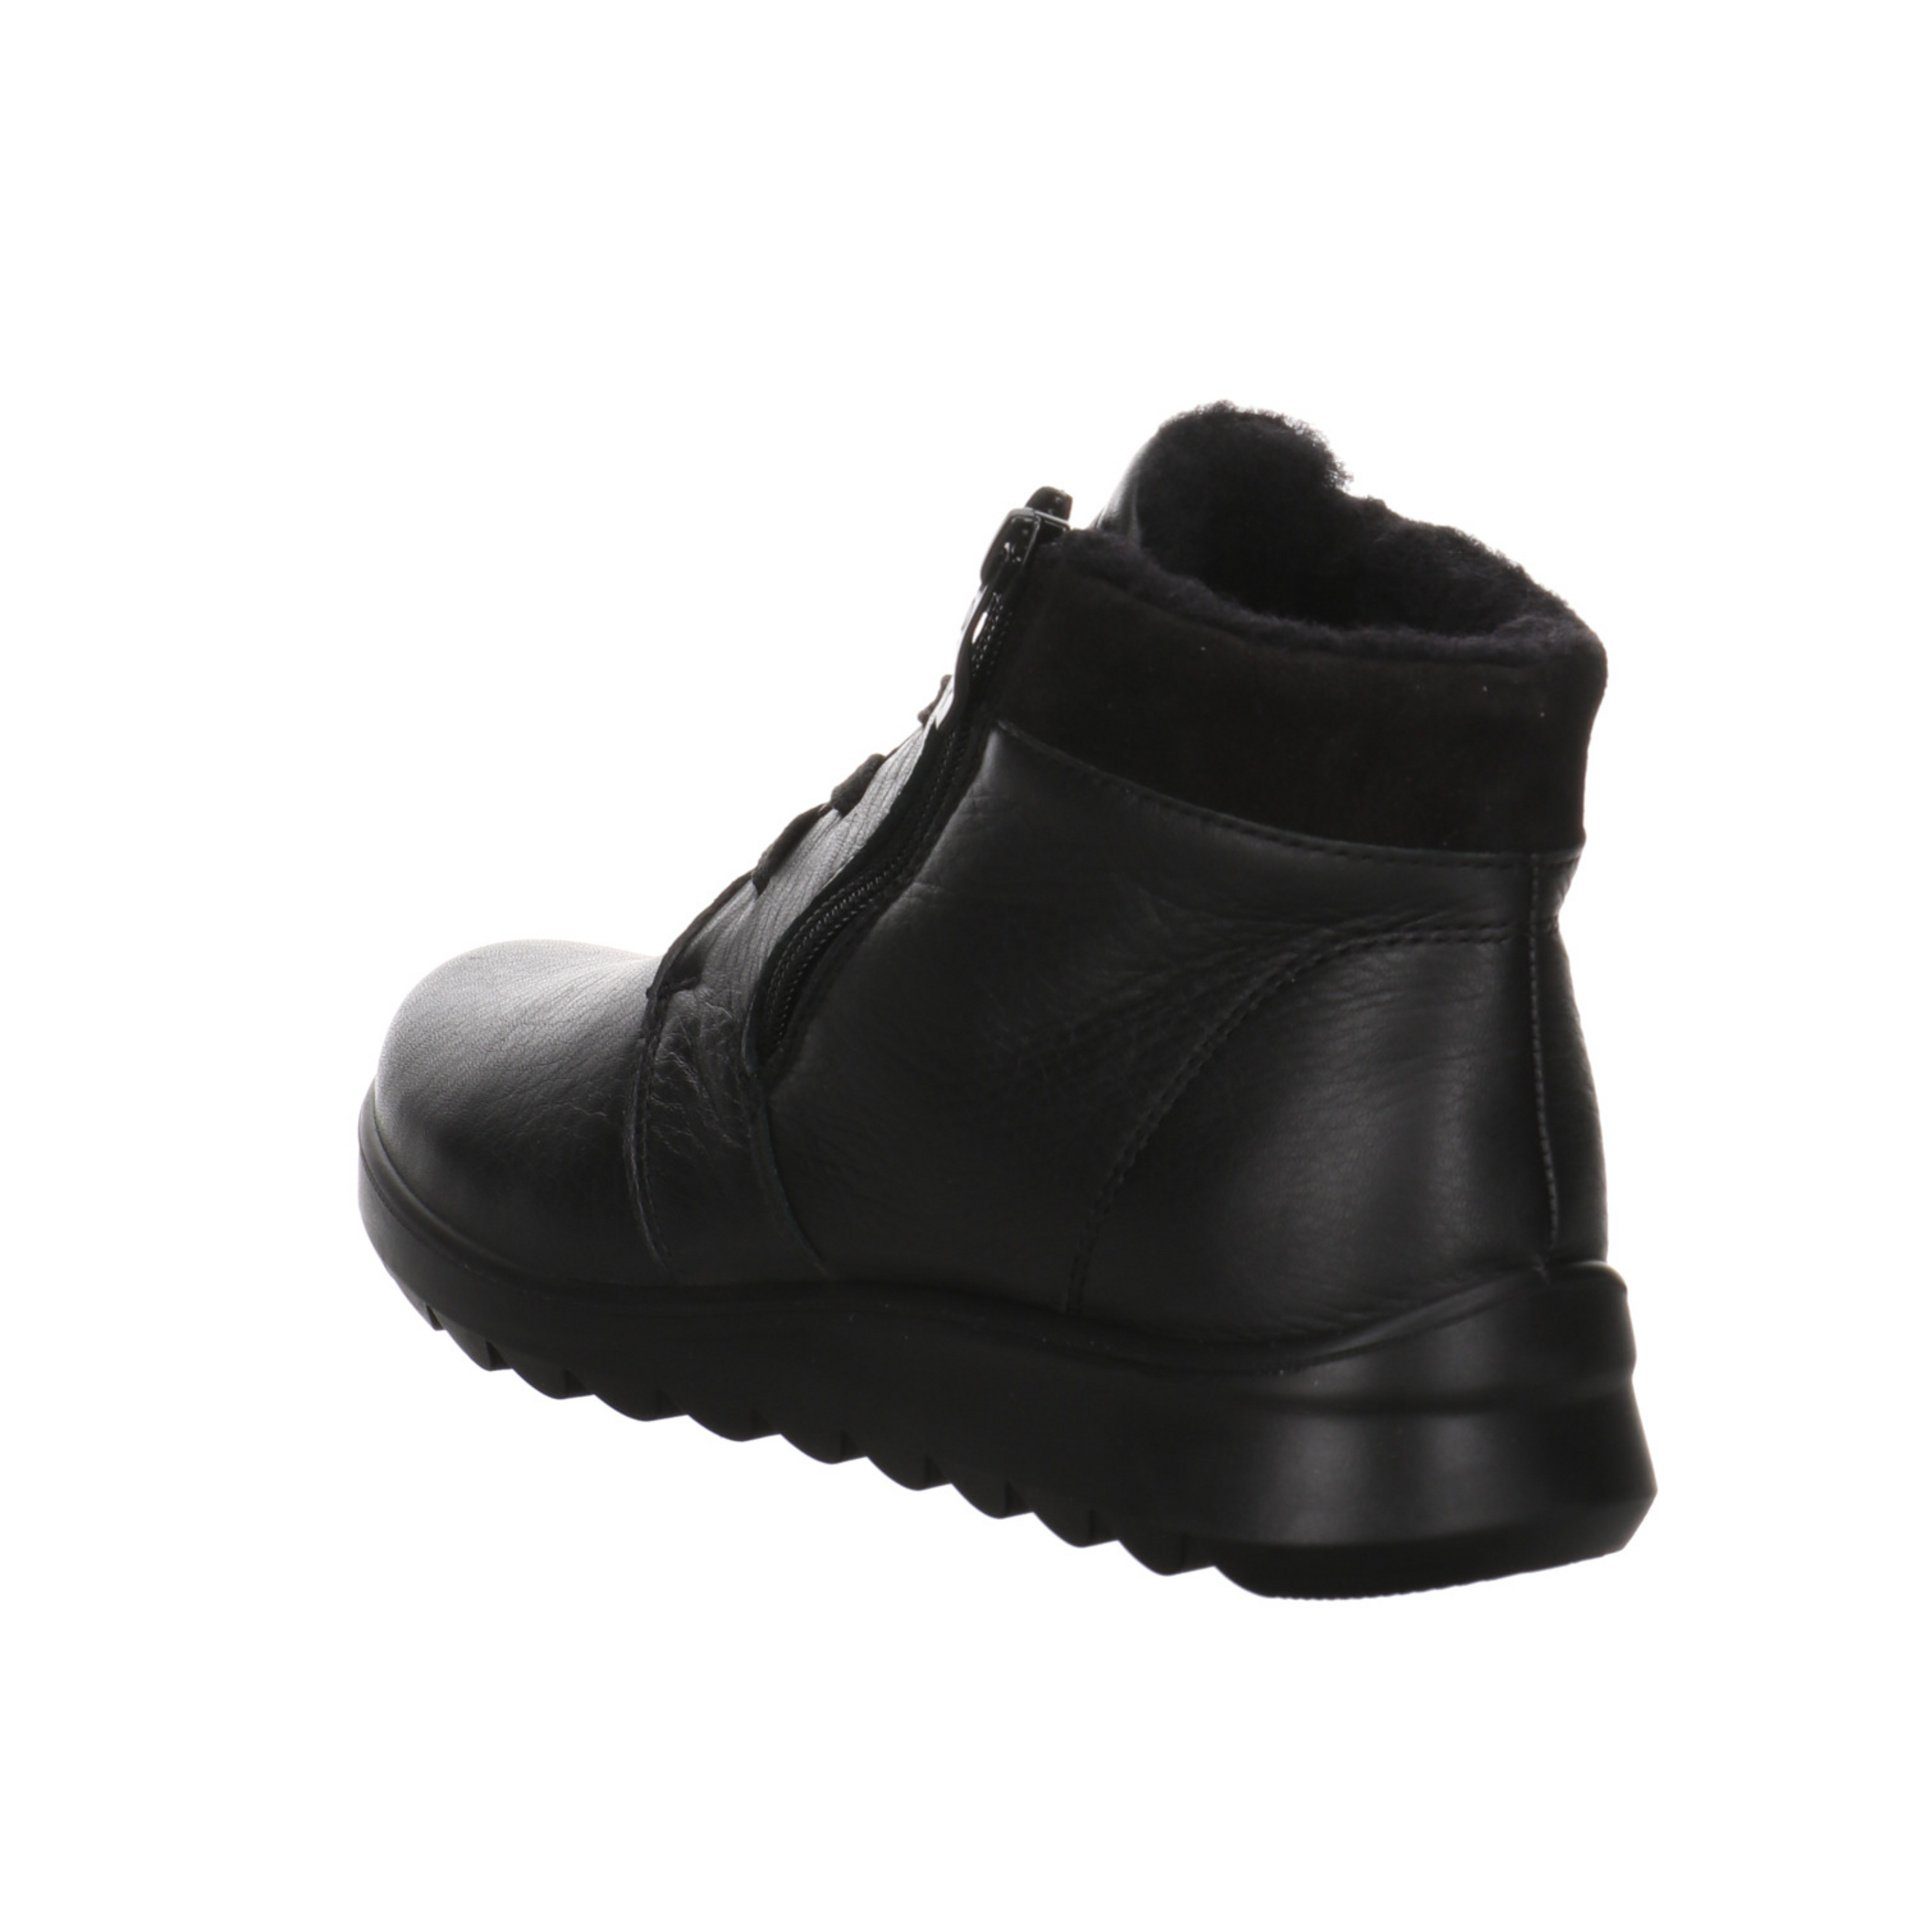 Ara Damen Stiefel Schuhe Toronto Stiefelette 046874 Boots schwarz Lederkombination